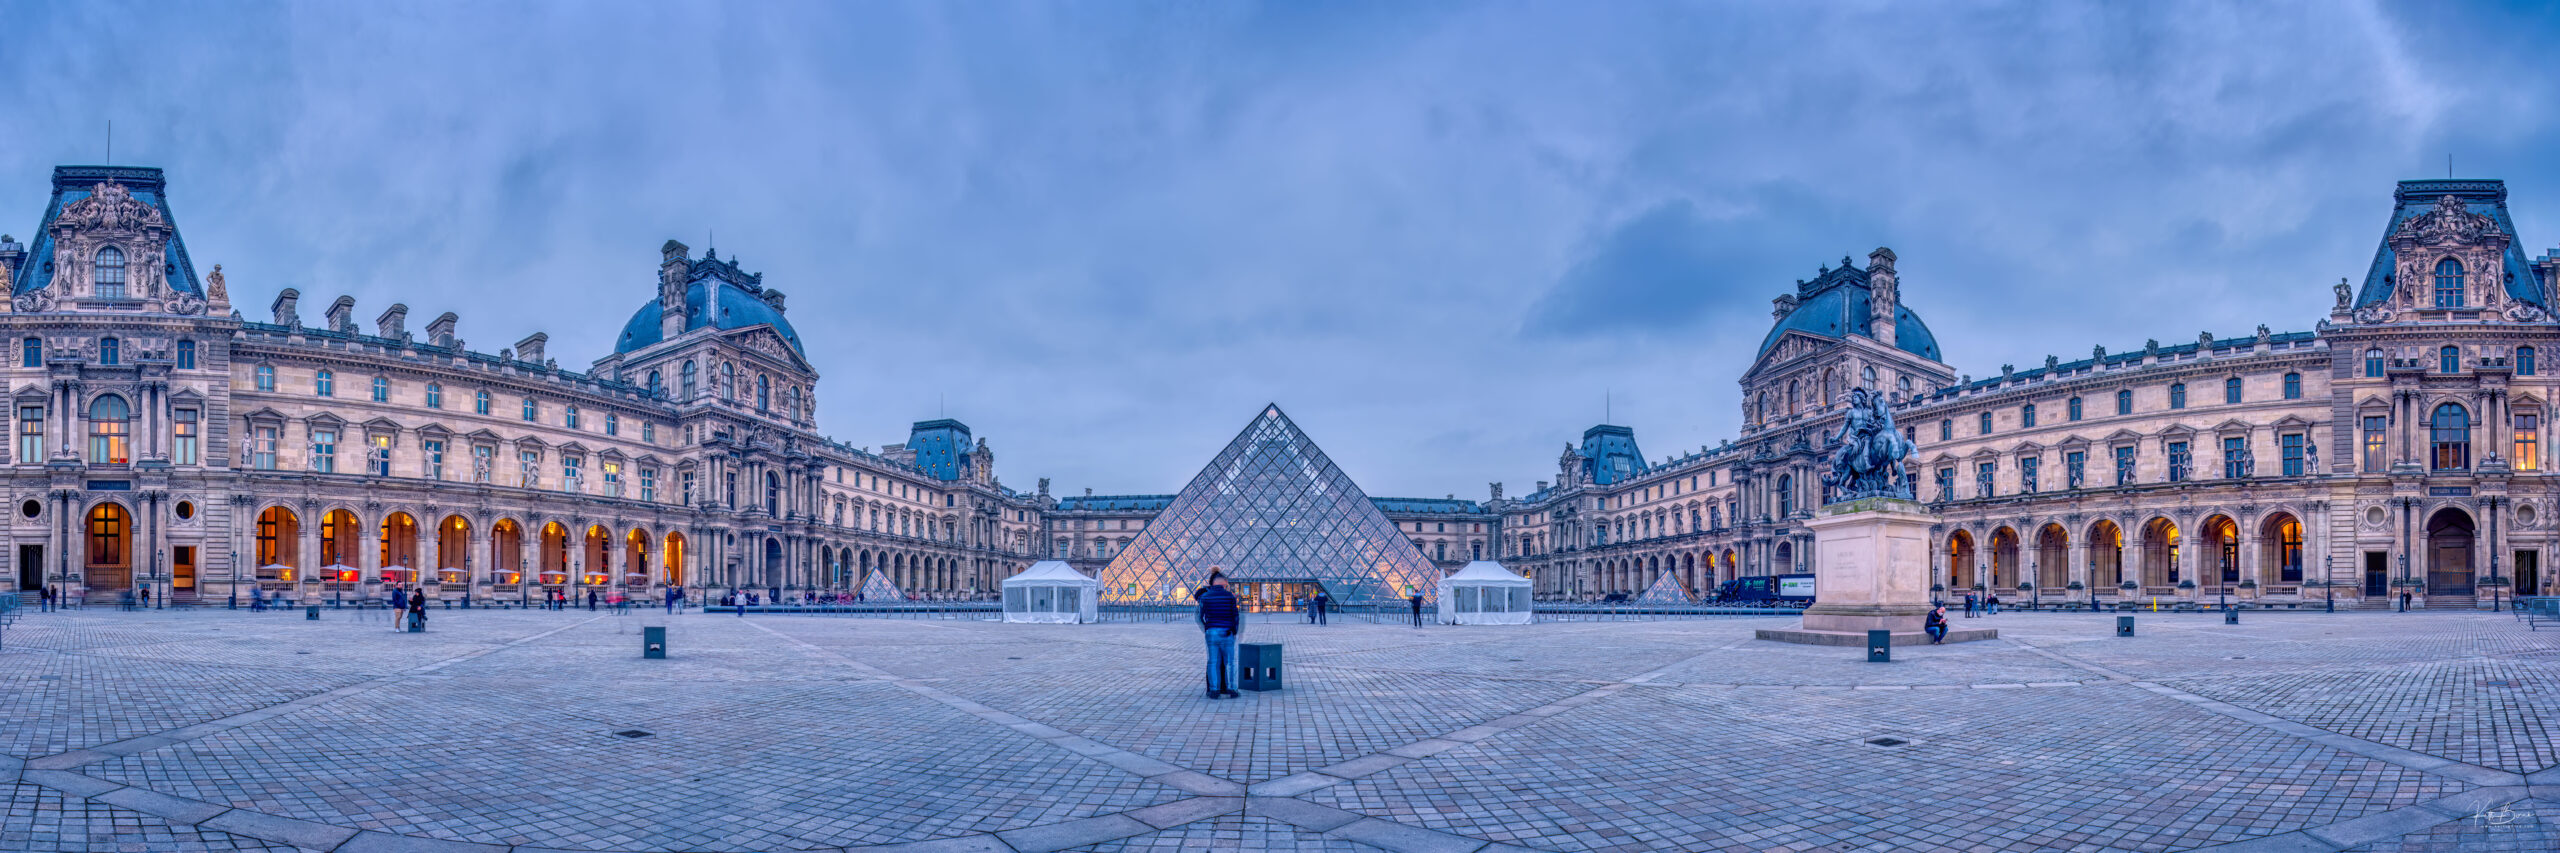 Louvre panorama photo